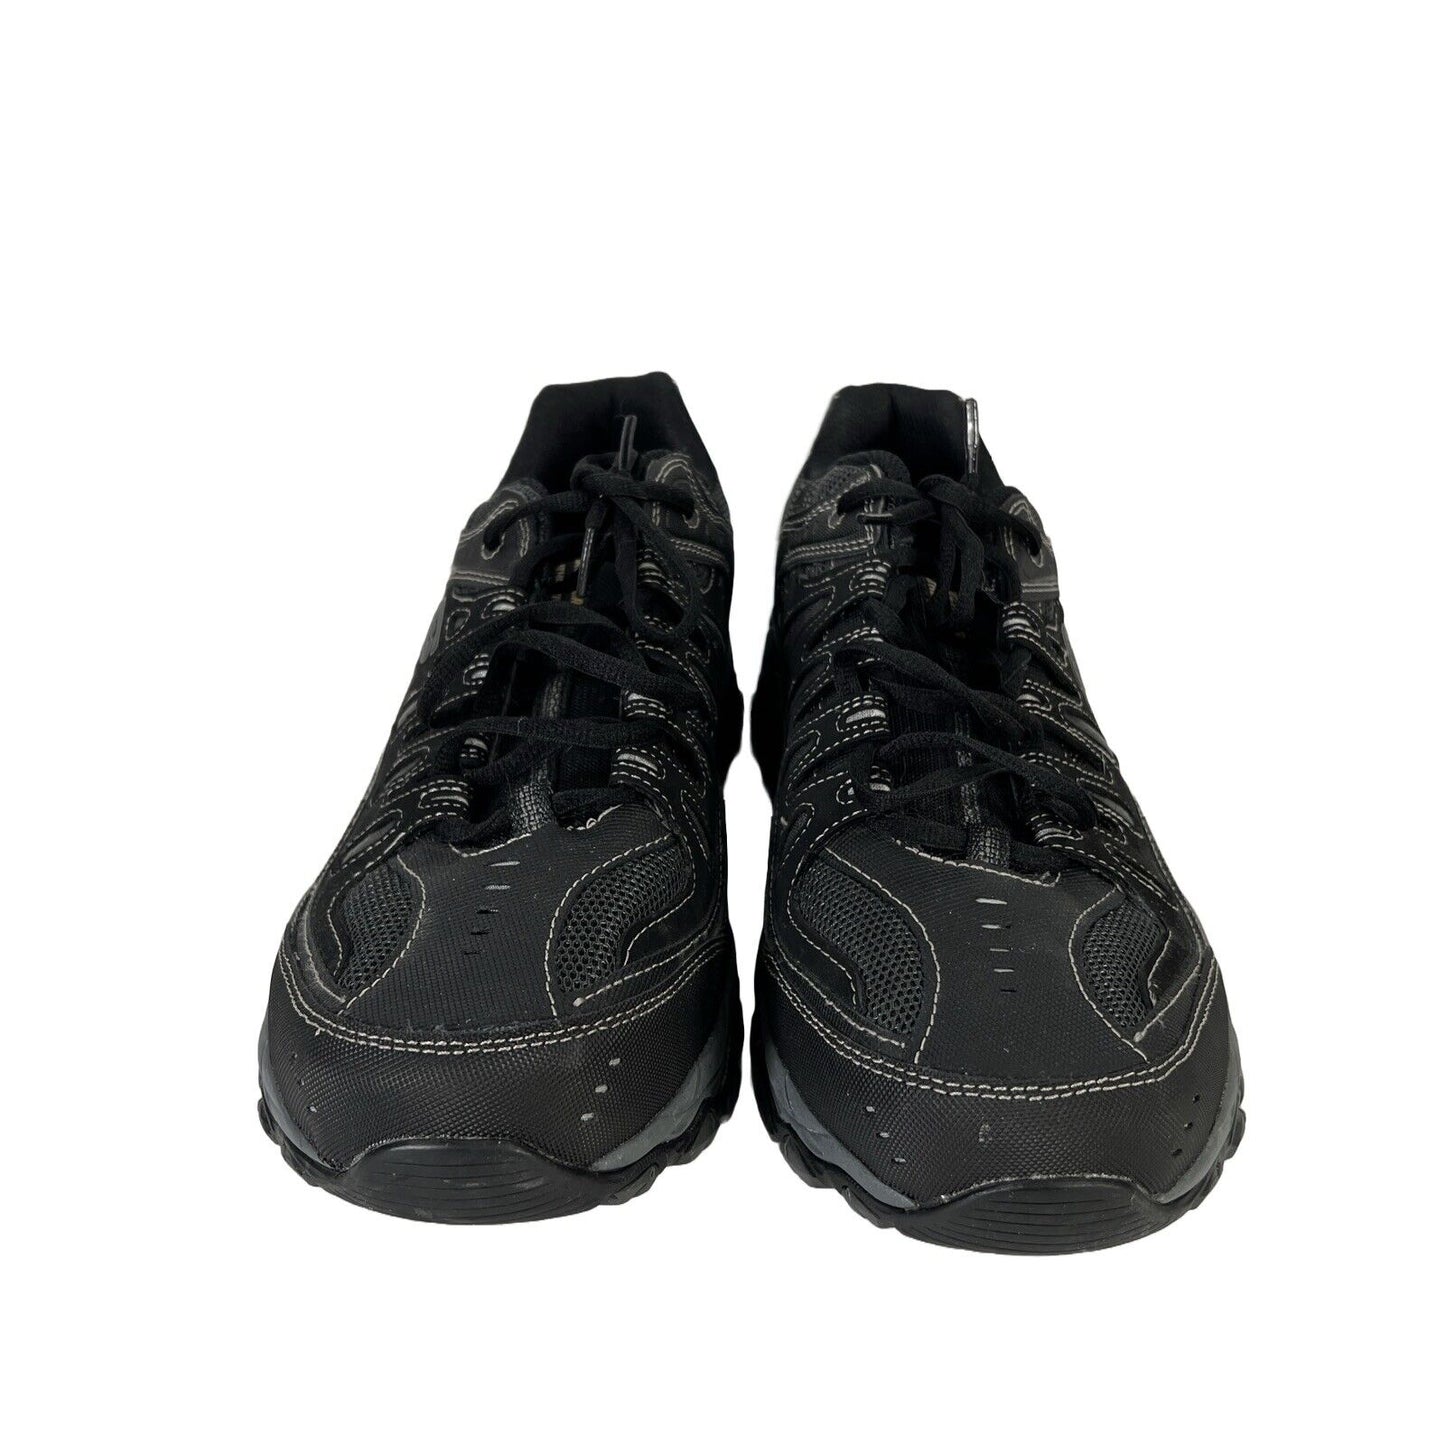 Skechers Men's Black After Burn Lace Up Walking Shoes - 14 Extra Wide